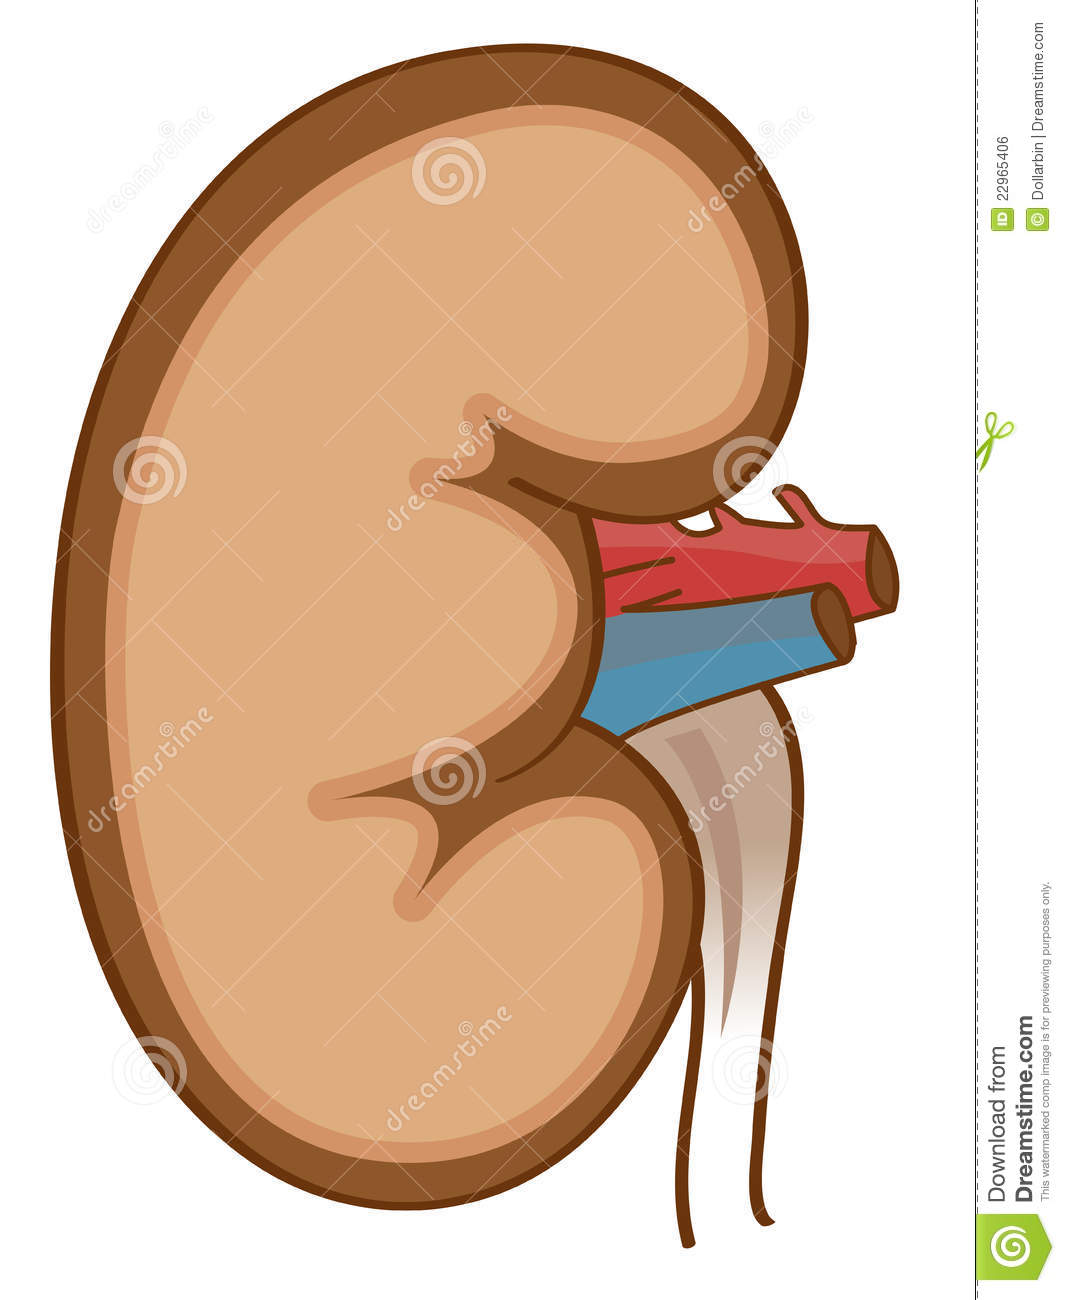 kidney clipart kid